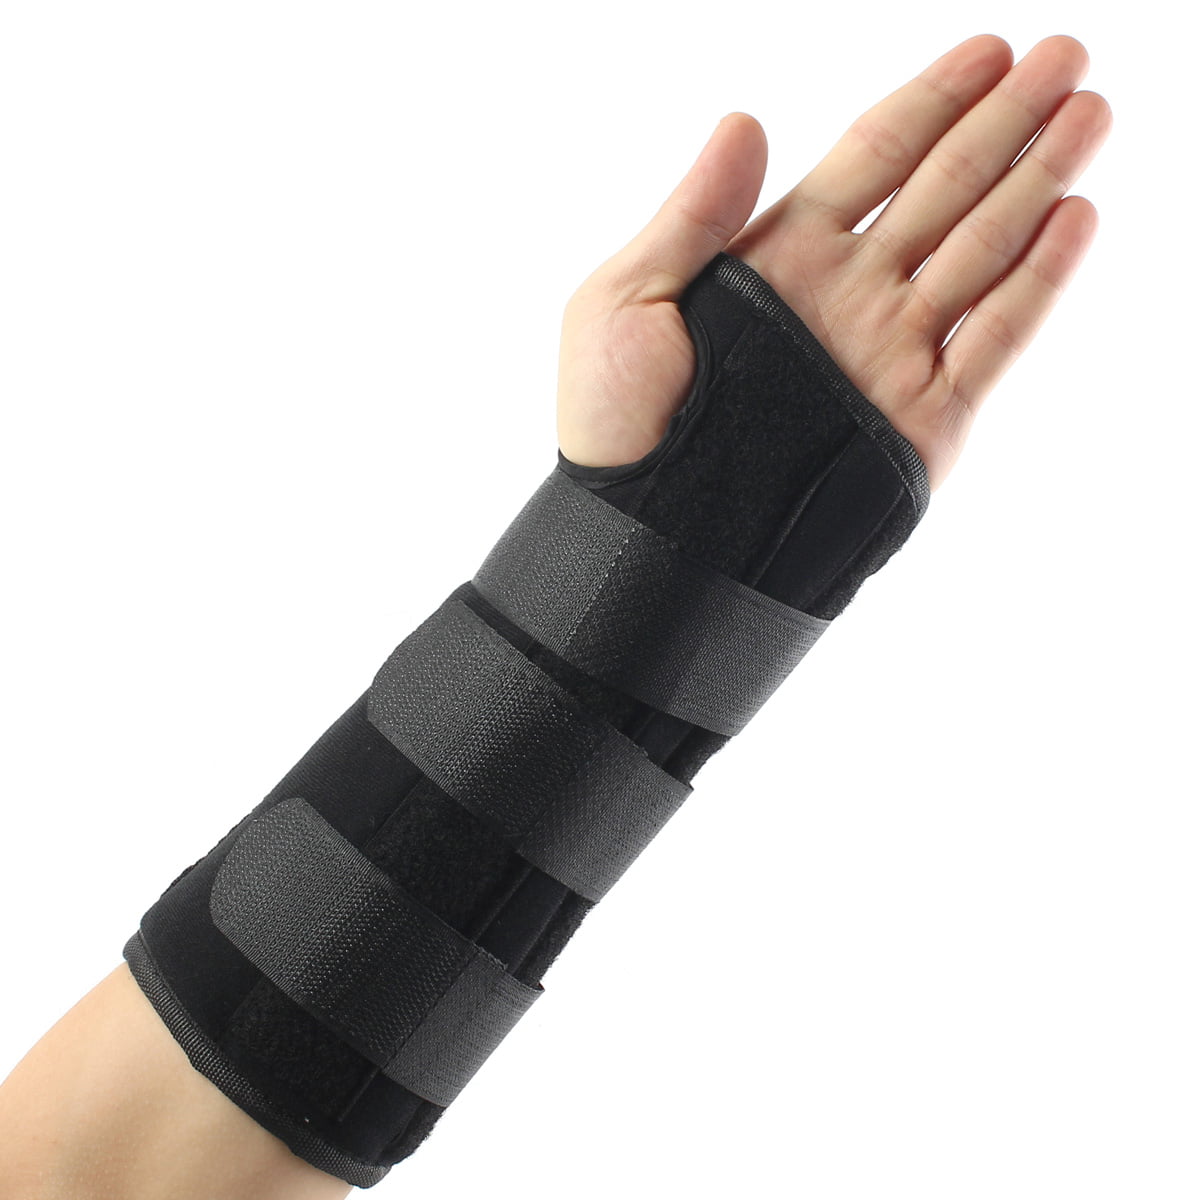 Small/Medium Tendinitis Left Hand Arthritis Pain Relief Hand Brace for Women and Men Night Support Brace with Wrist Splint Wrist Brace Carpal Tunnel Adjustable Straps Hot/Ice Pack